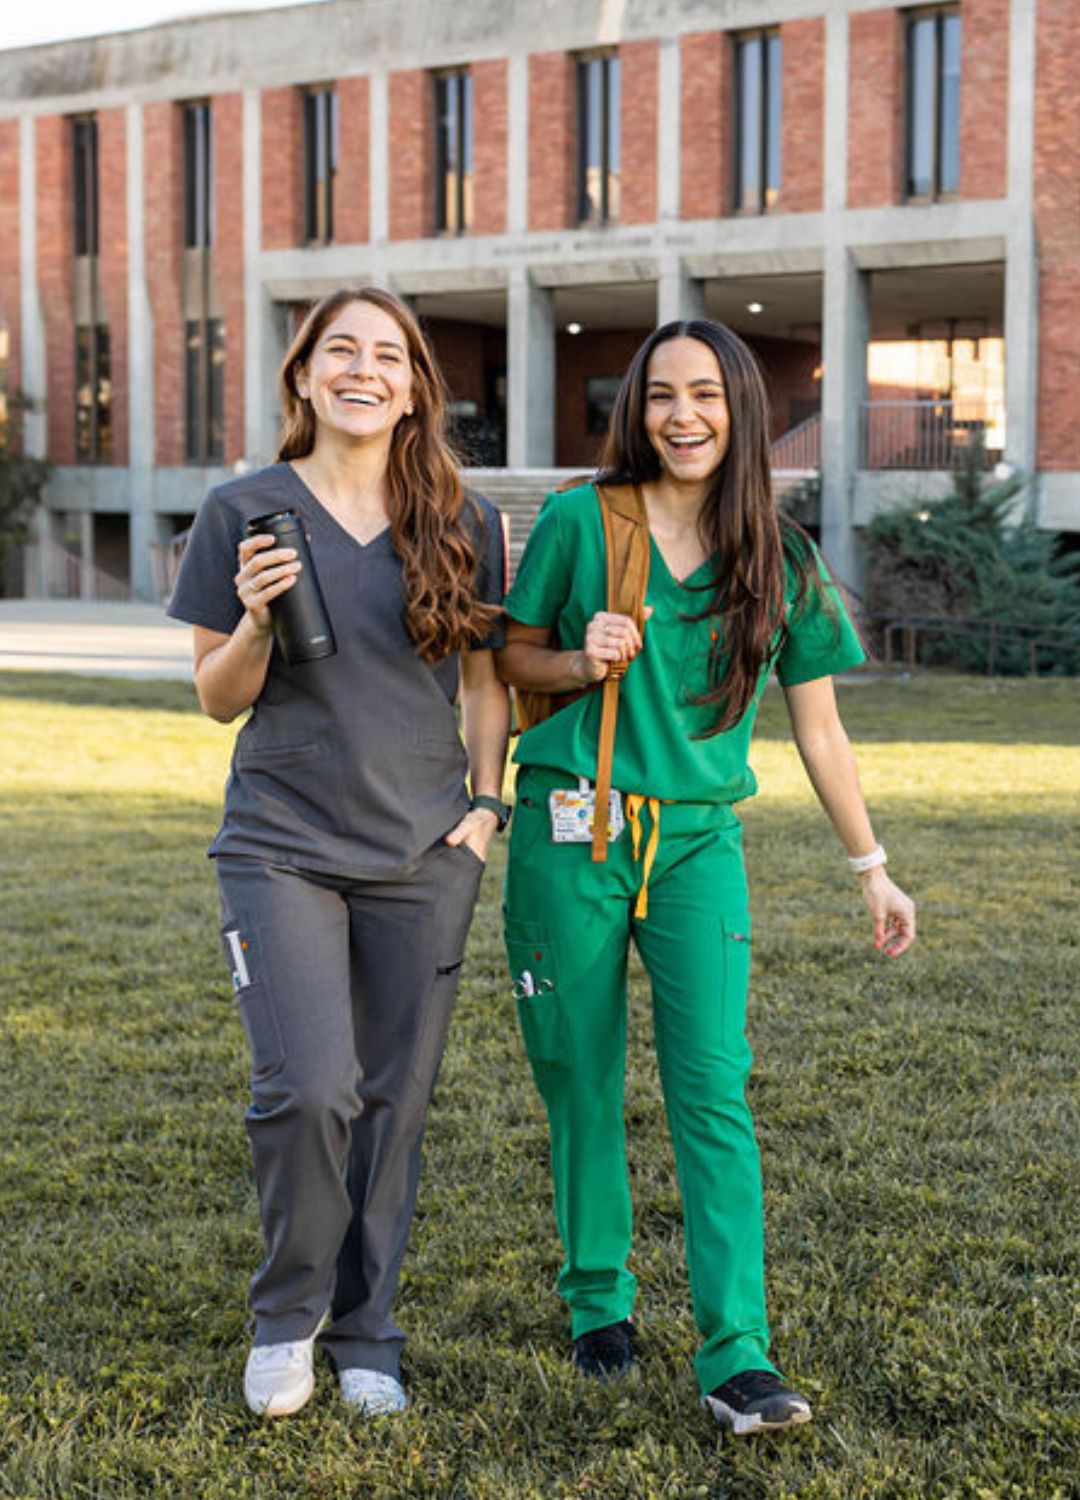 Women's emerald green scrubs walking with friend on grass.